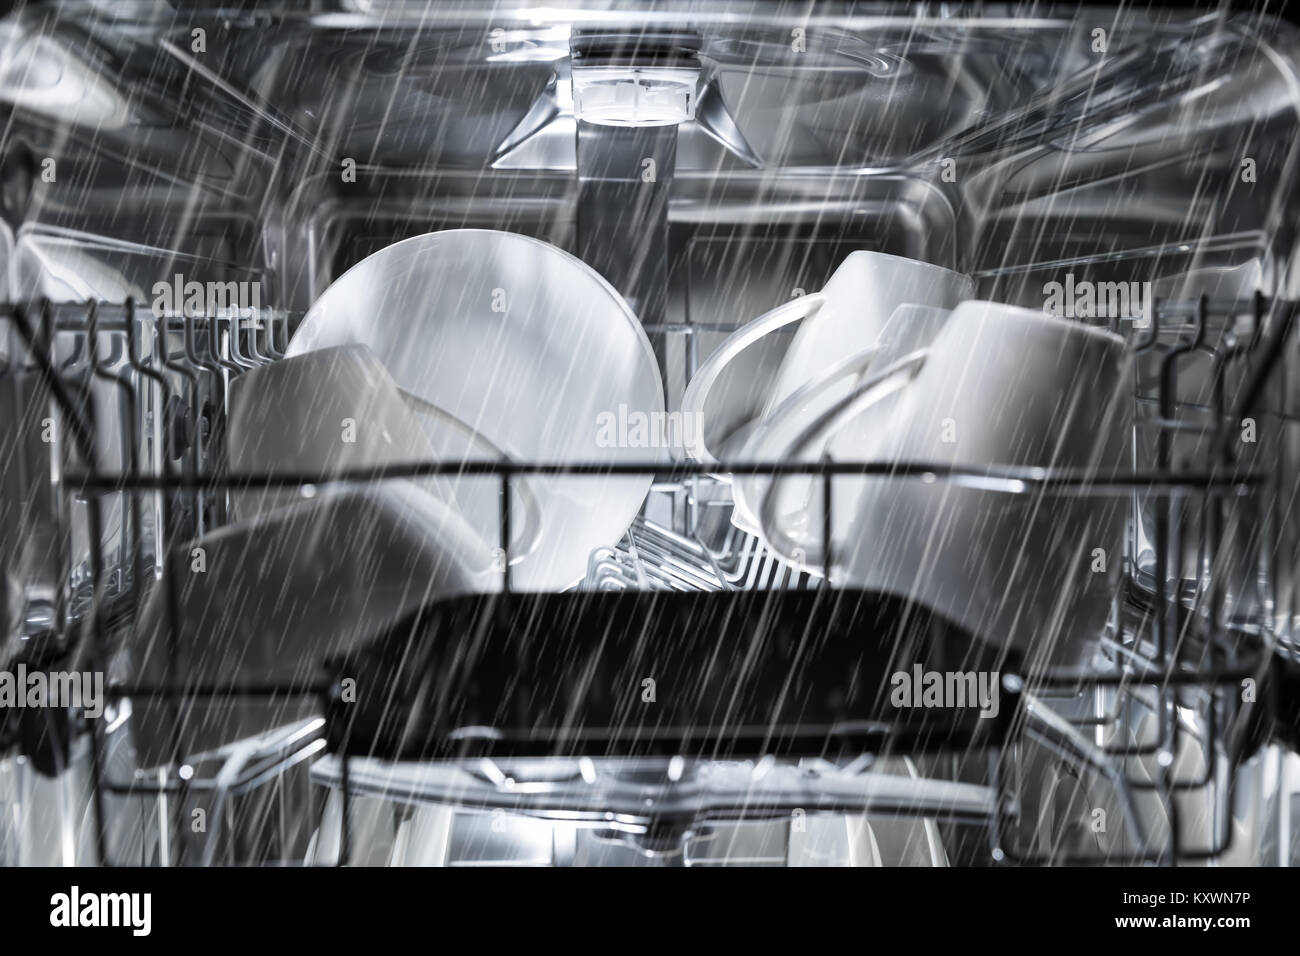 dishwasher machine working process. inside view Stock Photo